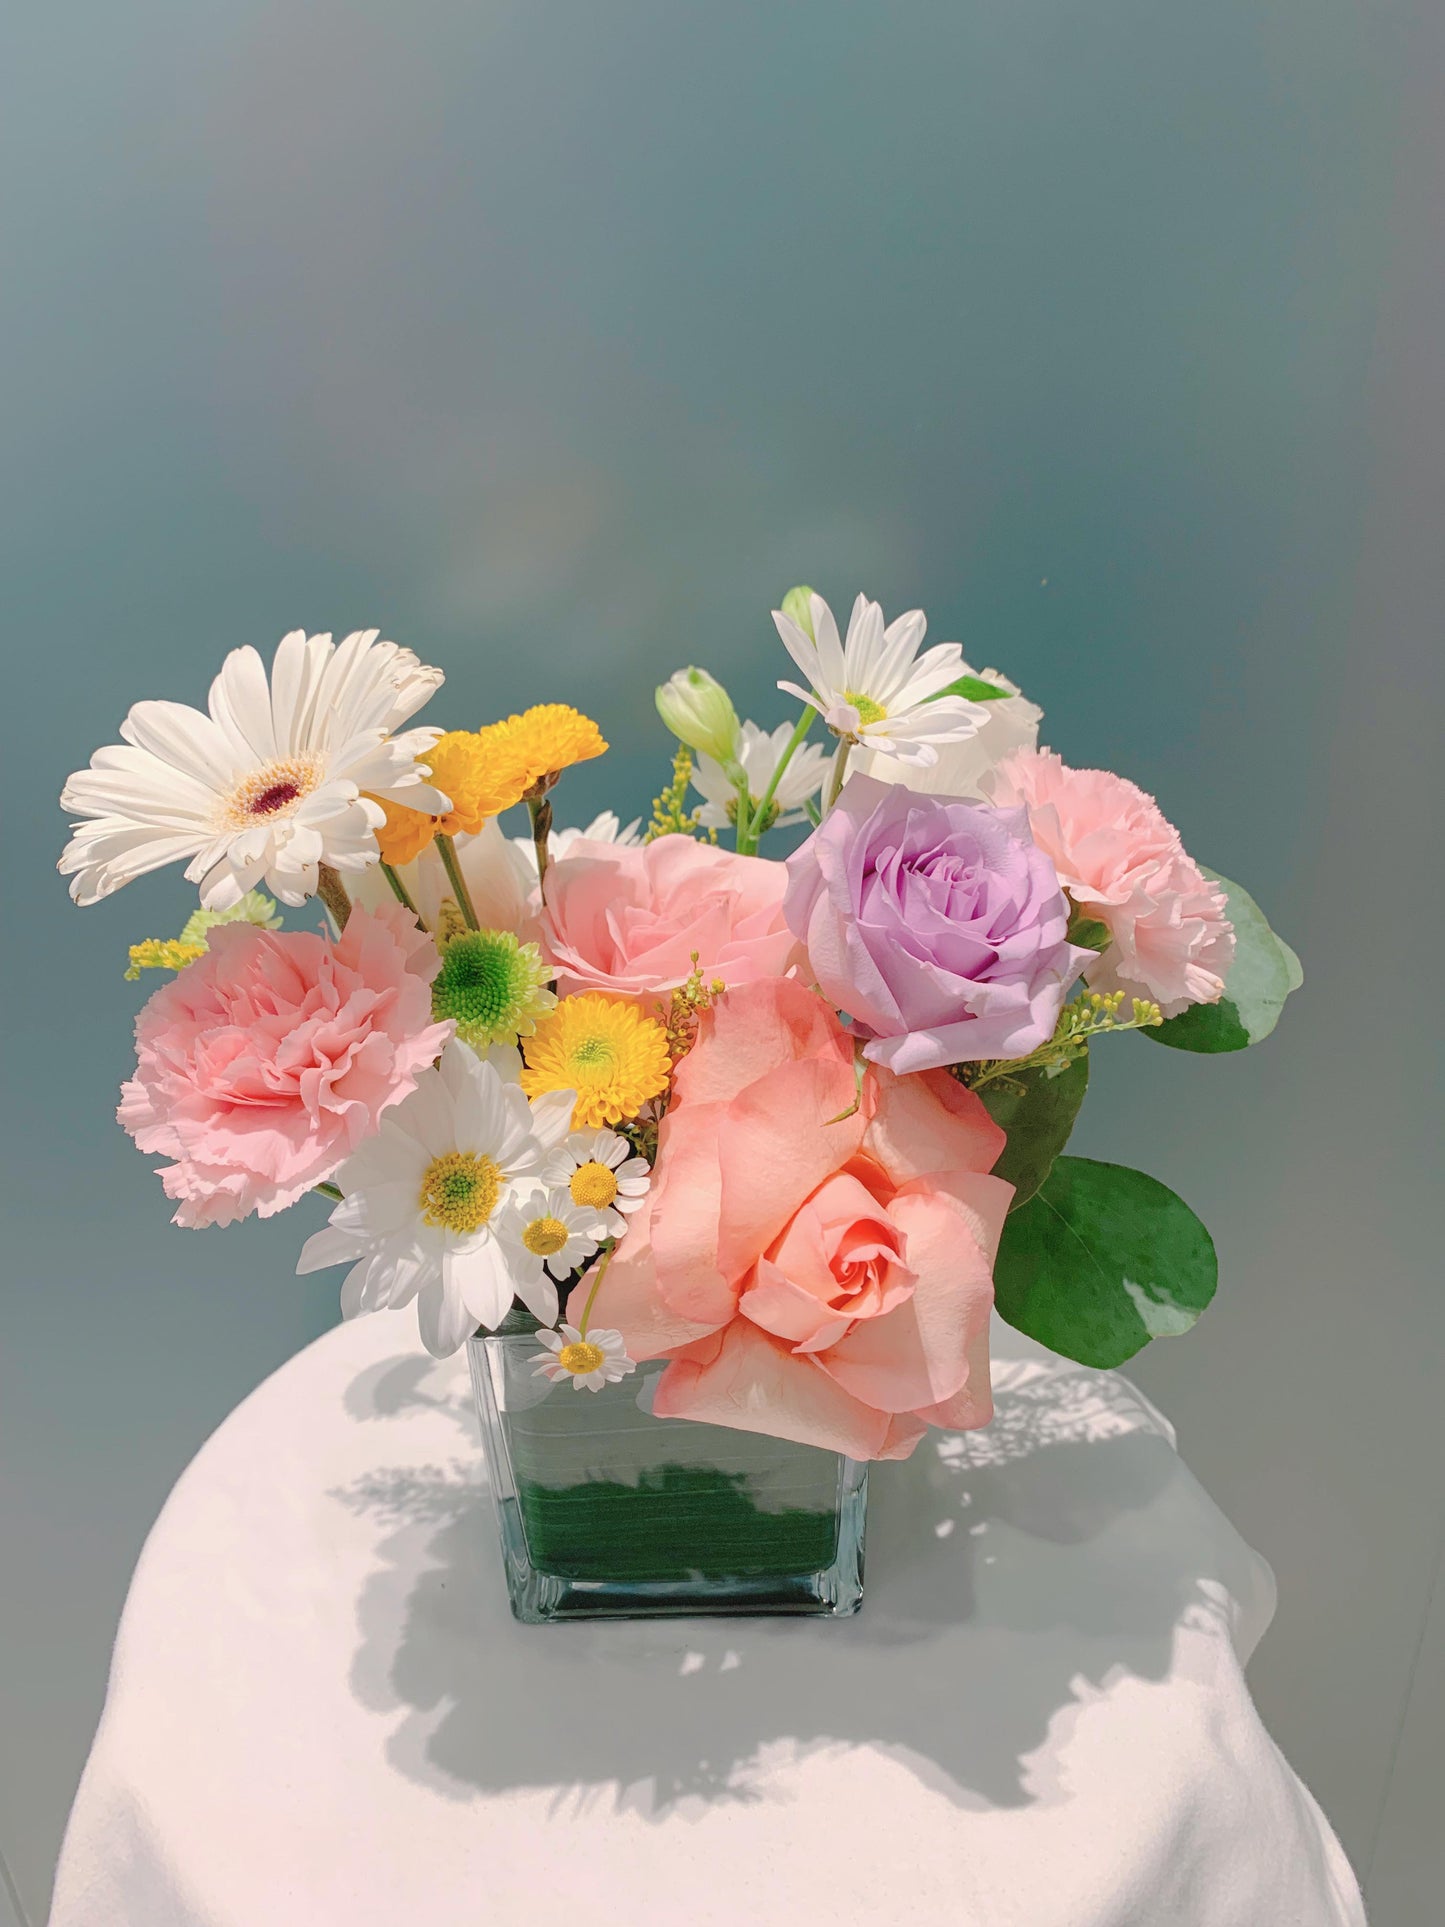 Pastel Flower Arrangement in a Vase